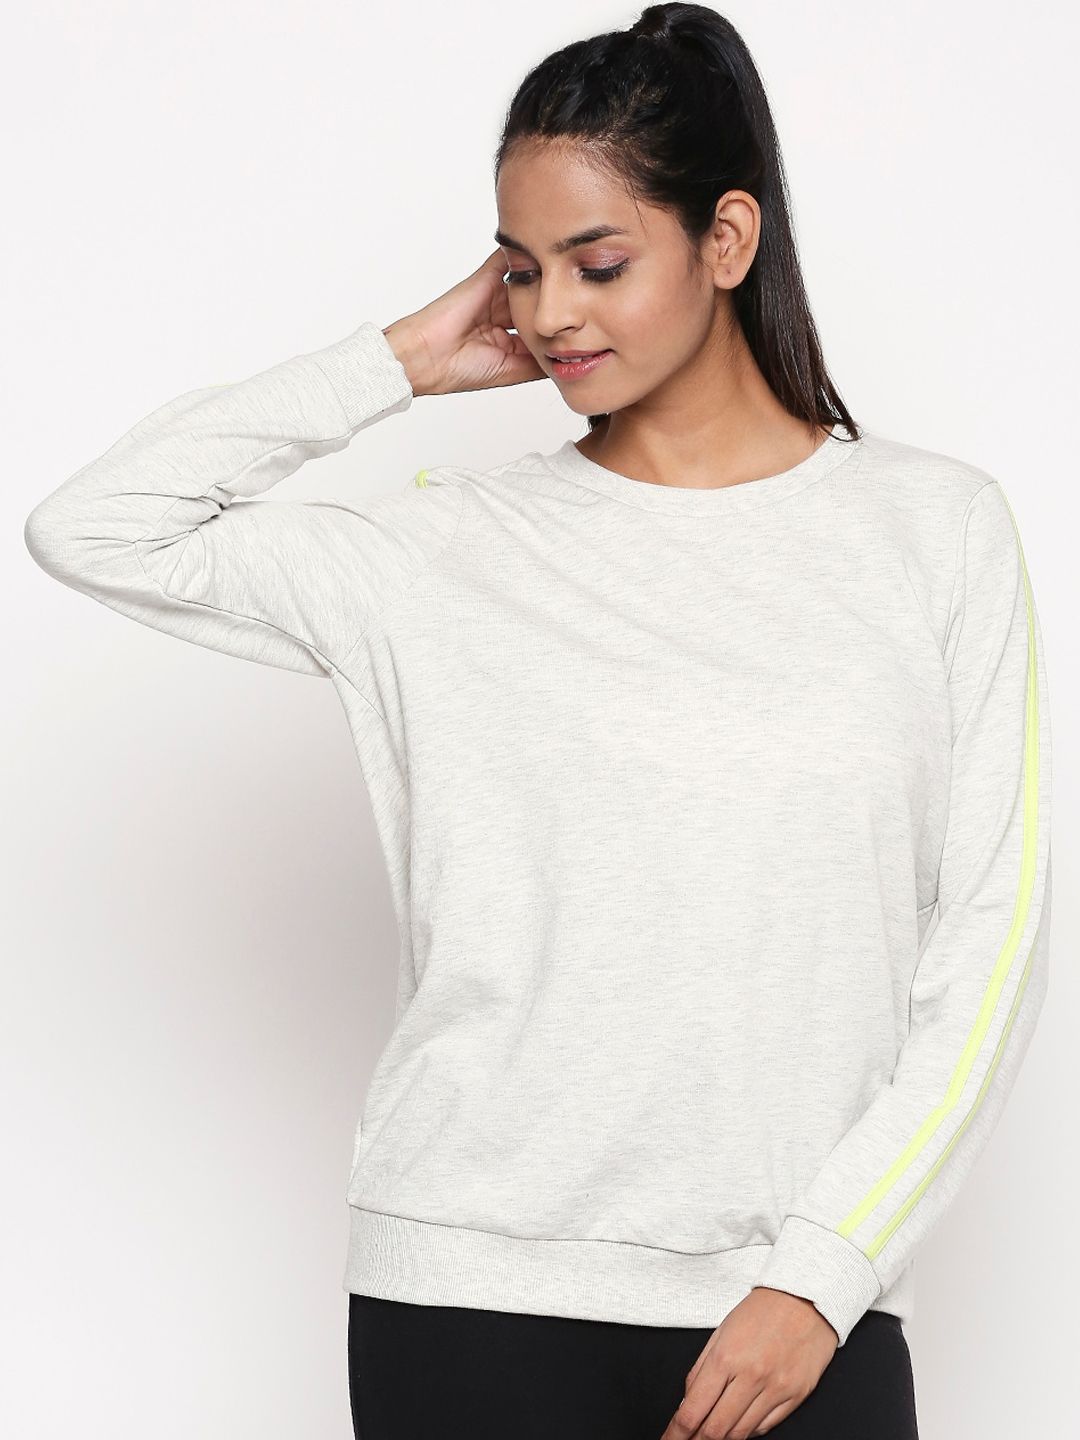 Ajile by Pantaloons Women Grey Solid Sweatshirt Price in India